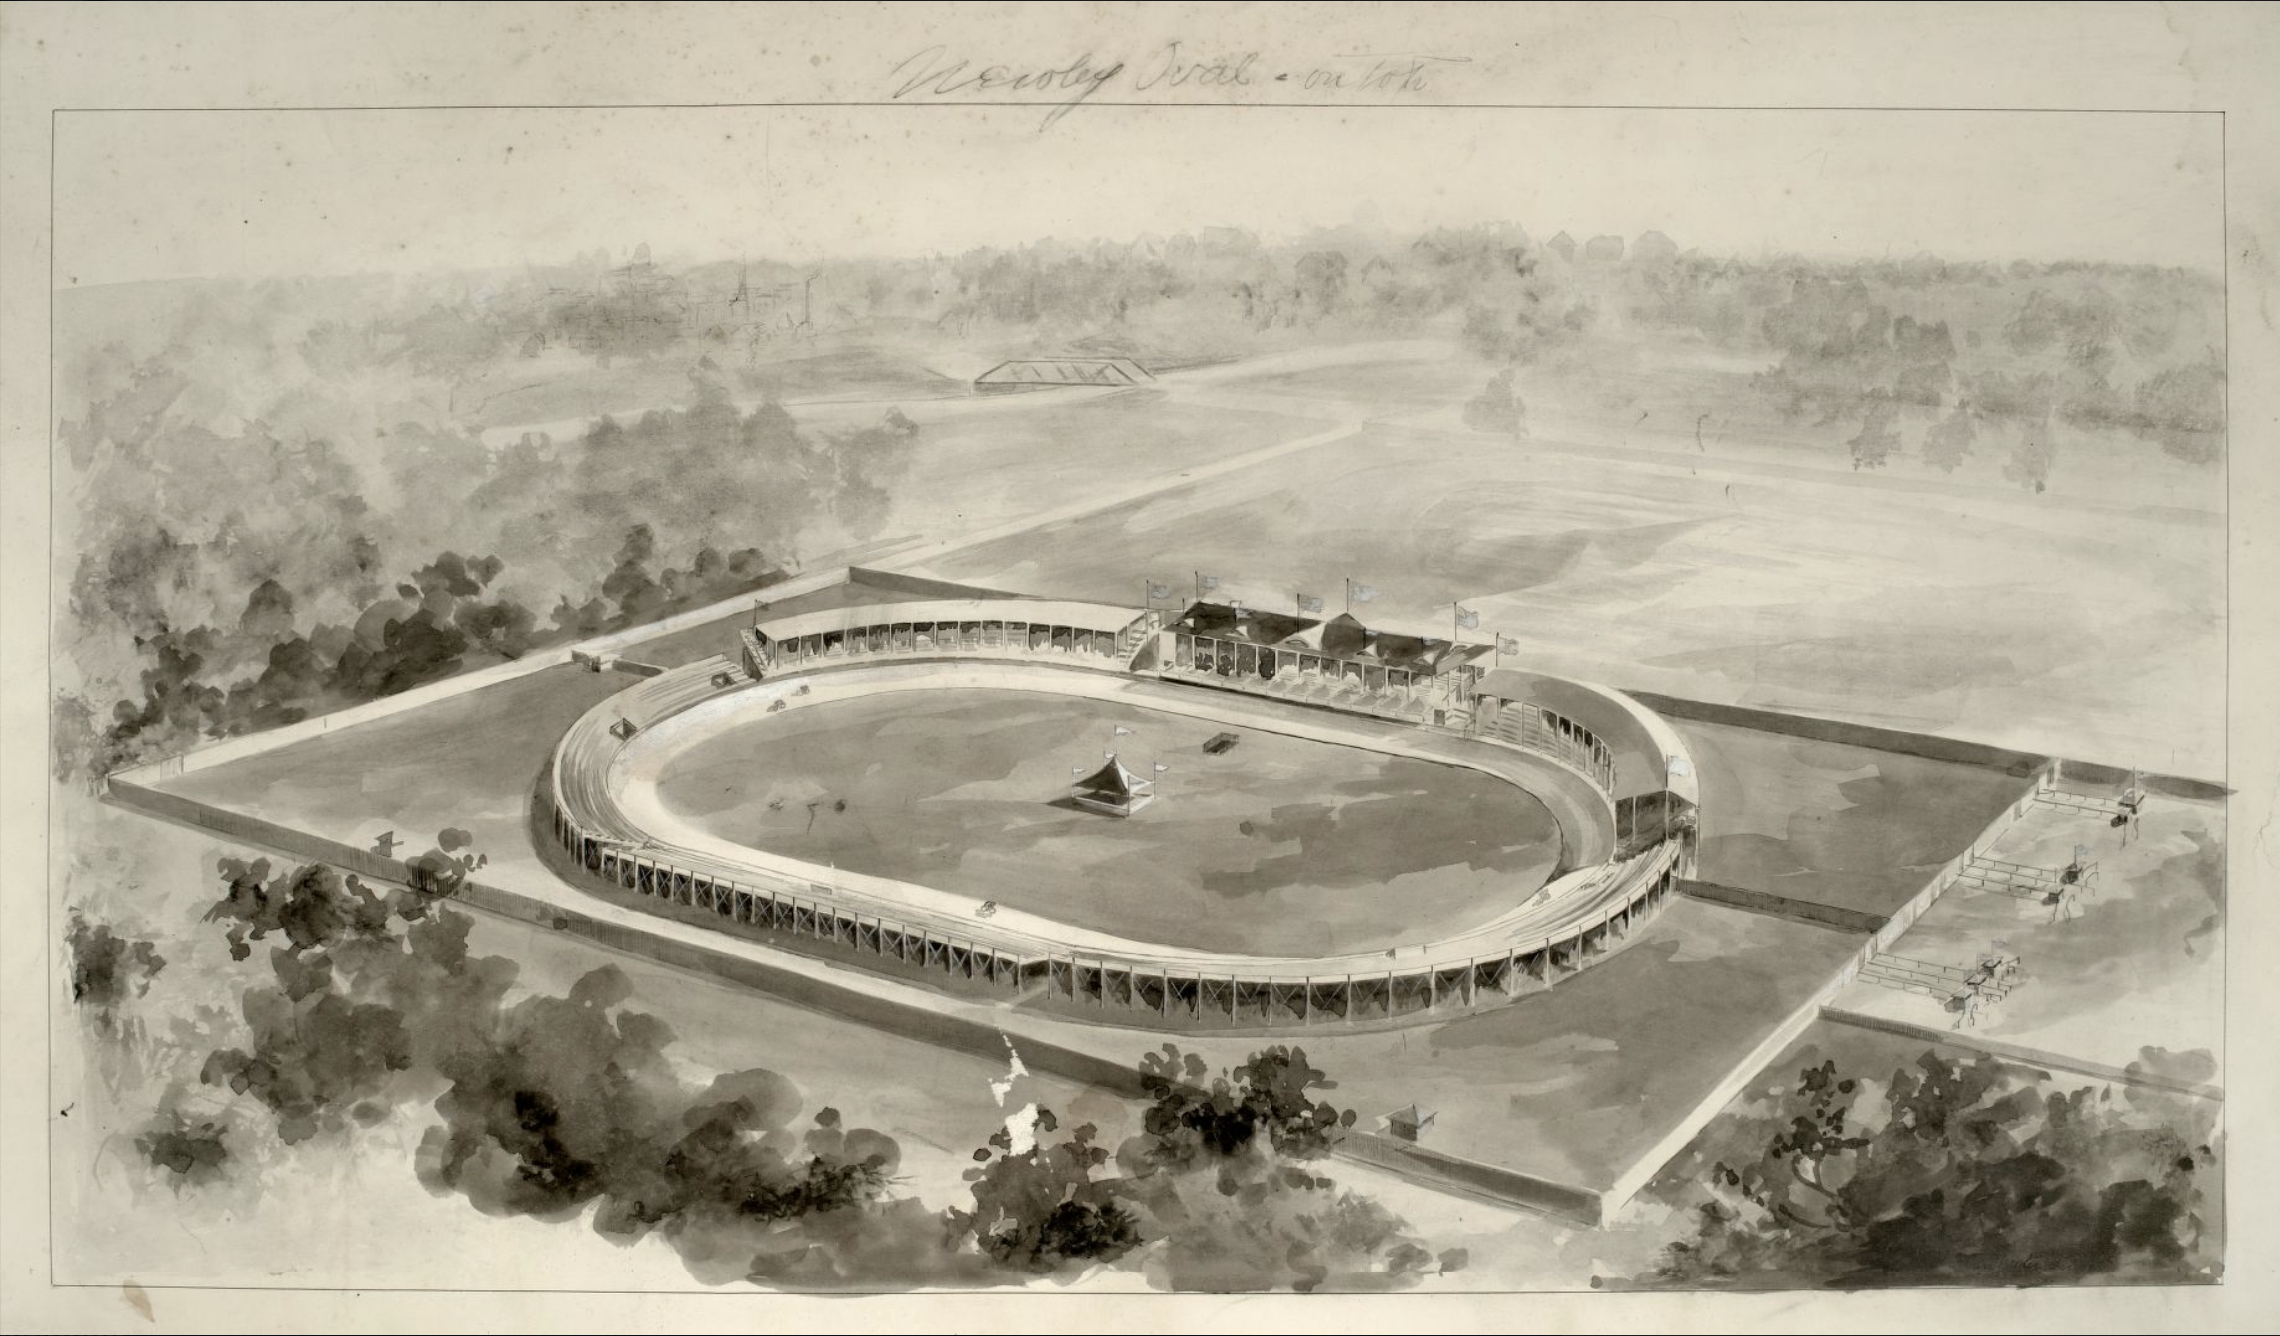 Newby Oval